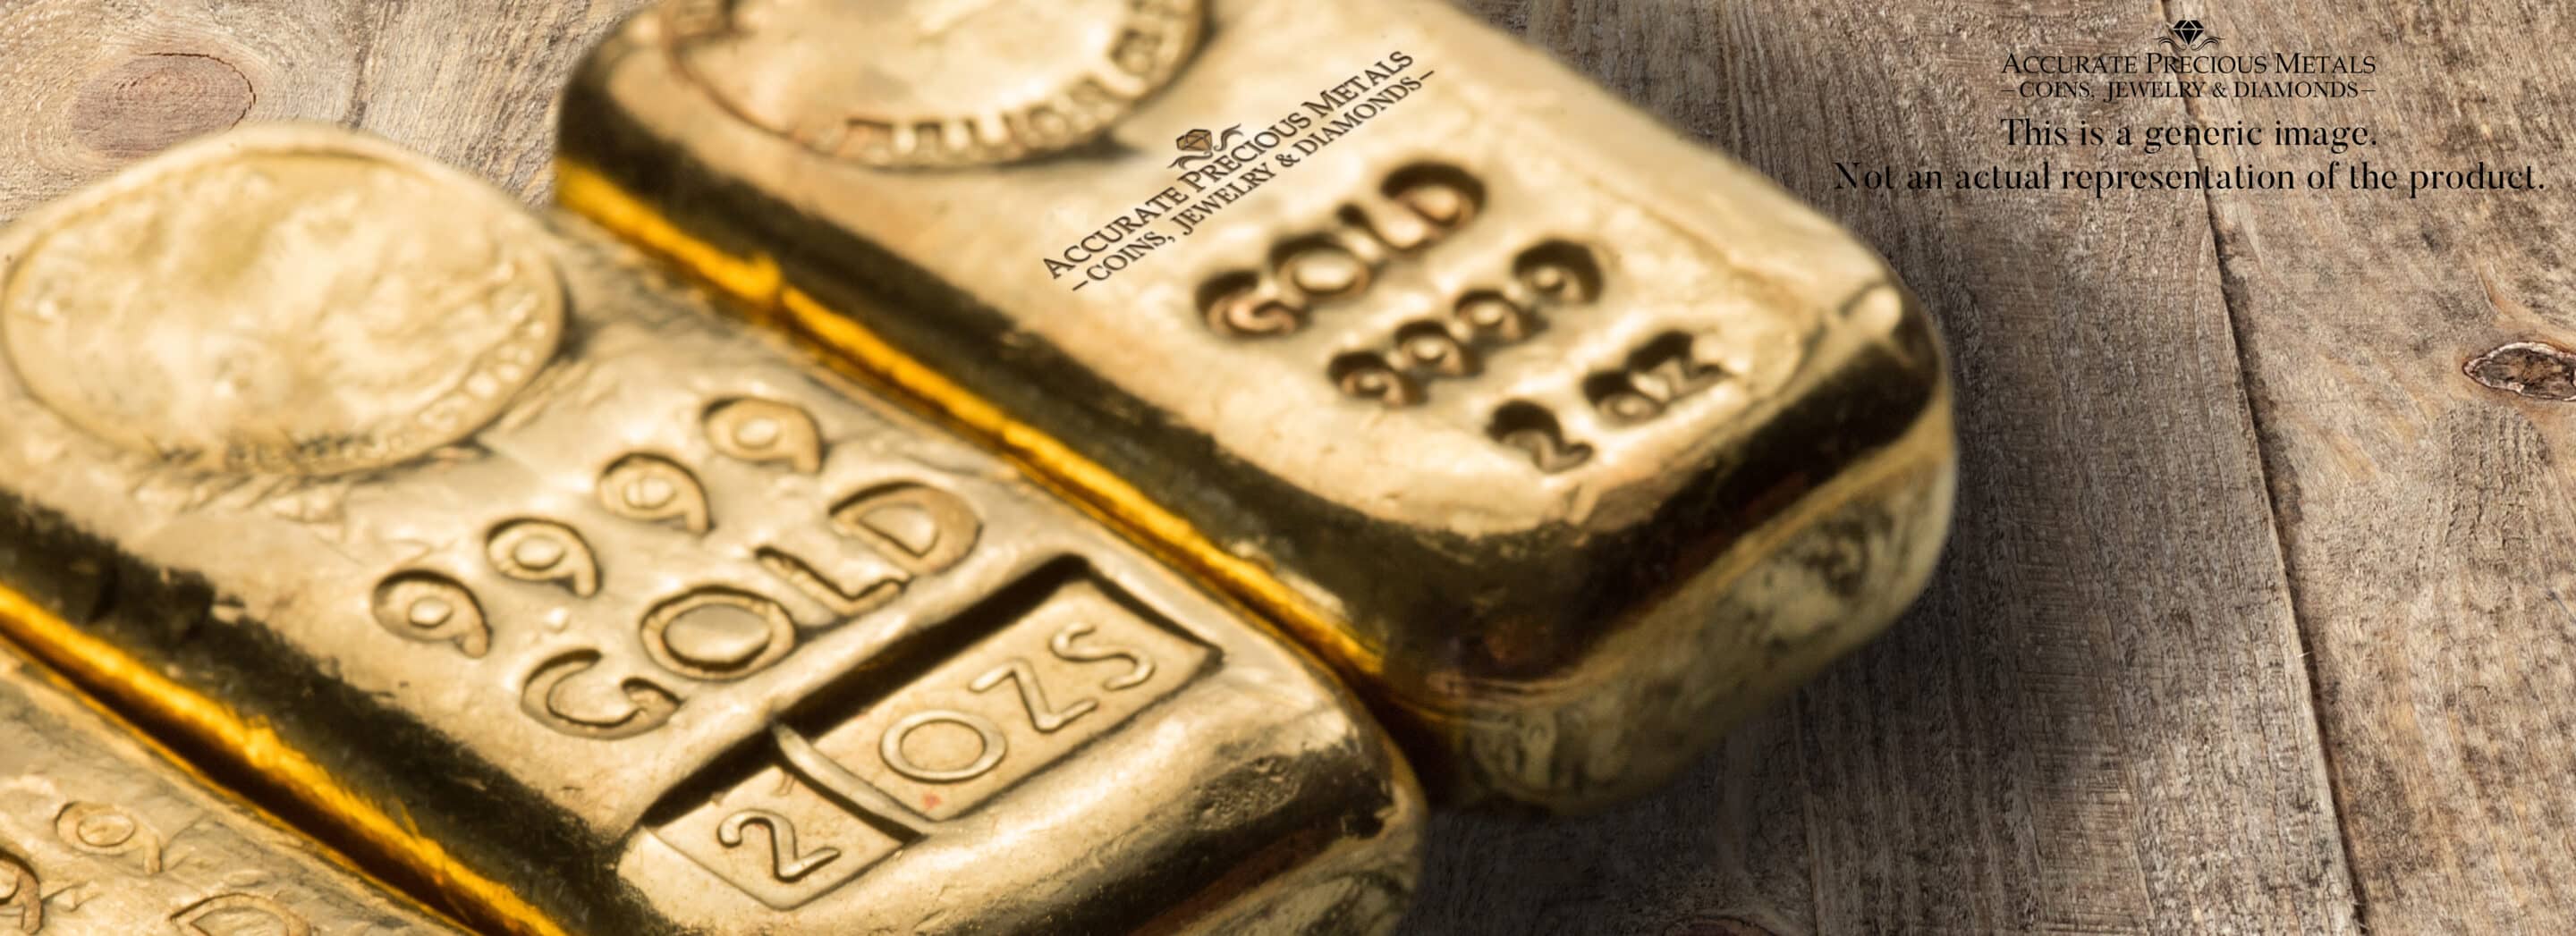 Shining Geiger Edelmetalle 50g Gold Bar - Premium Investment Choice